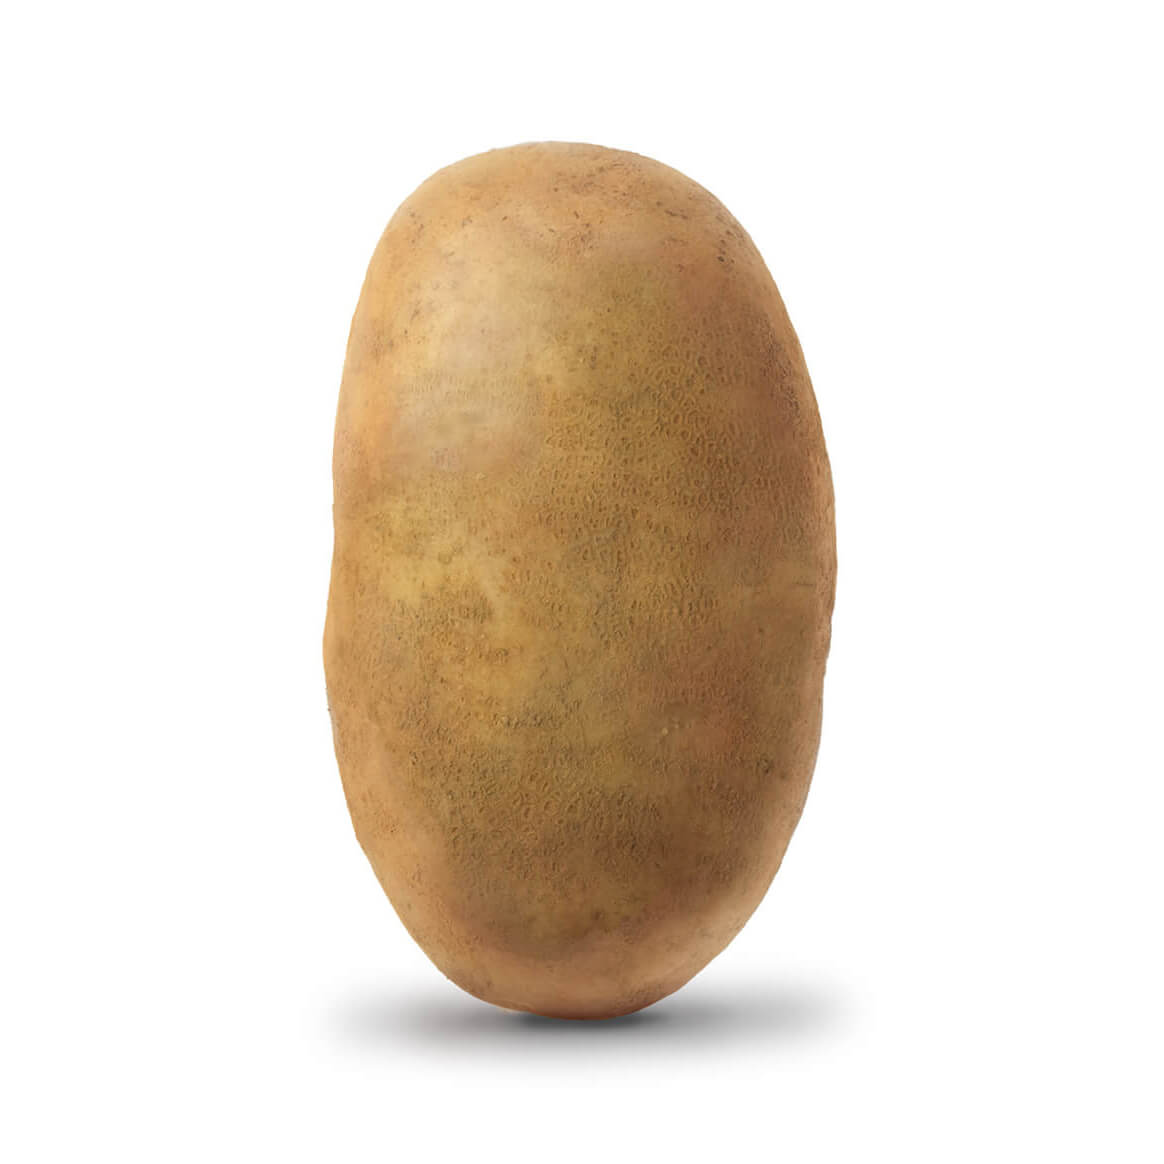 Amvac Smartblock, illustrations of a bald potato